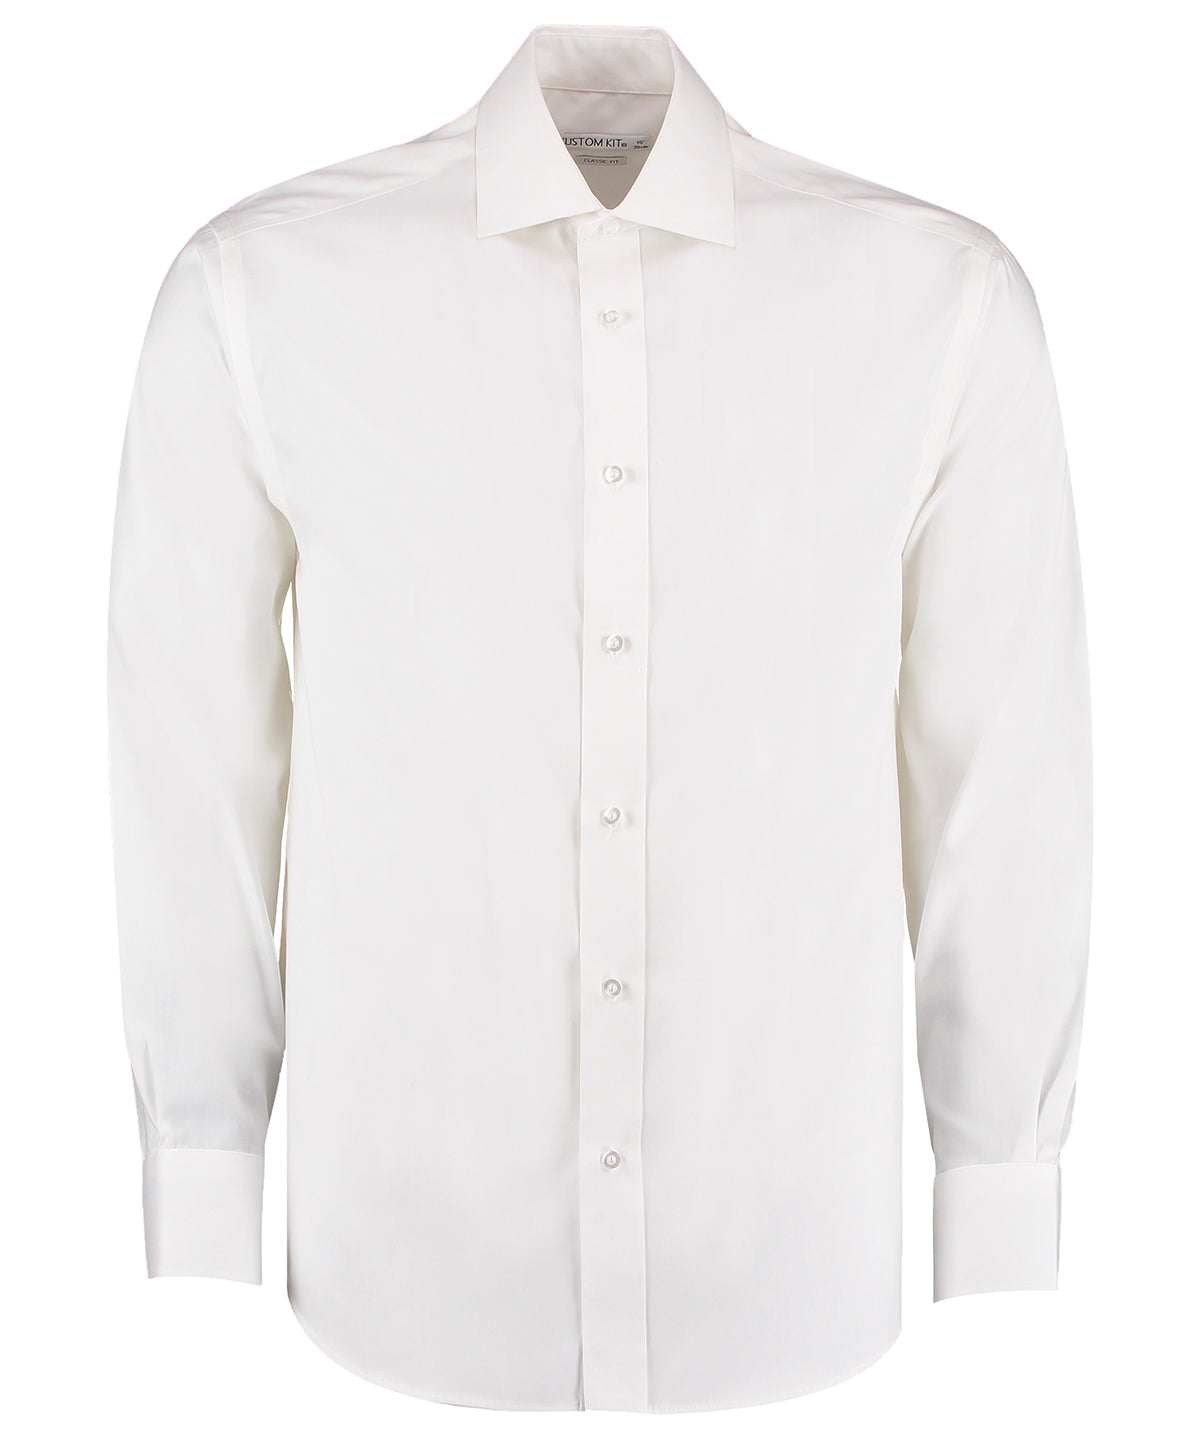 Kustom Kit Executive premium Oxford shirt long-sleeved